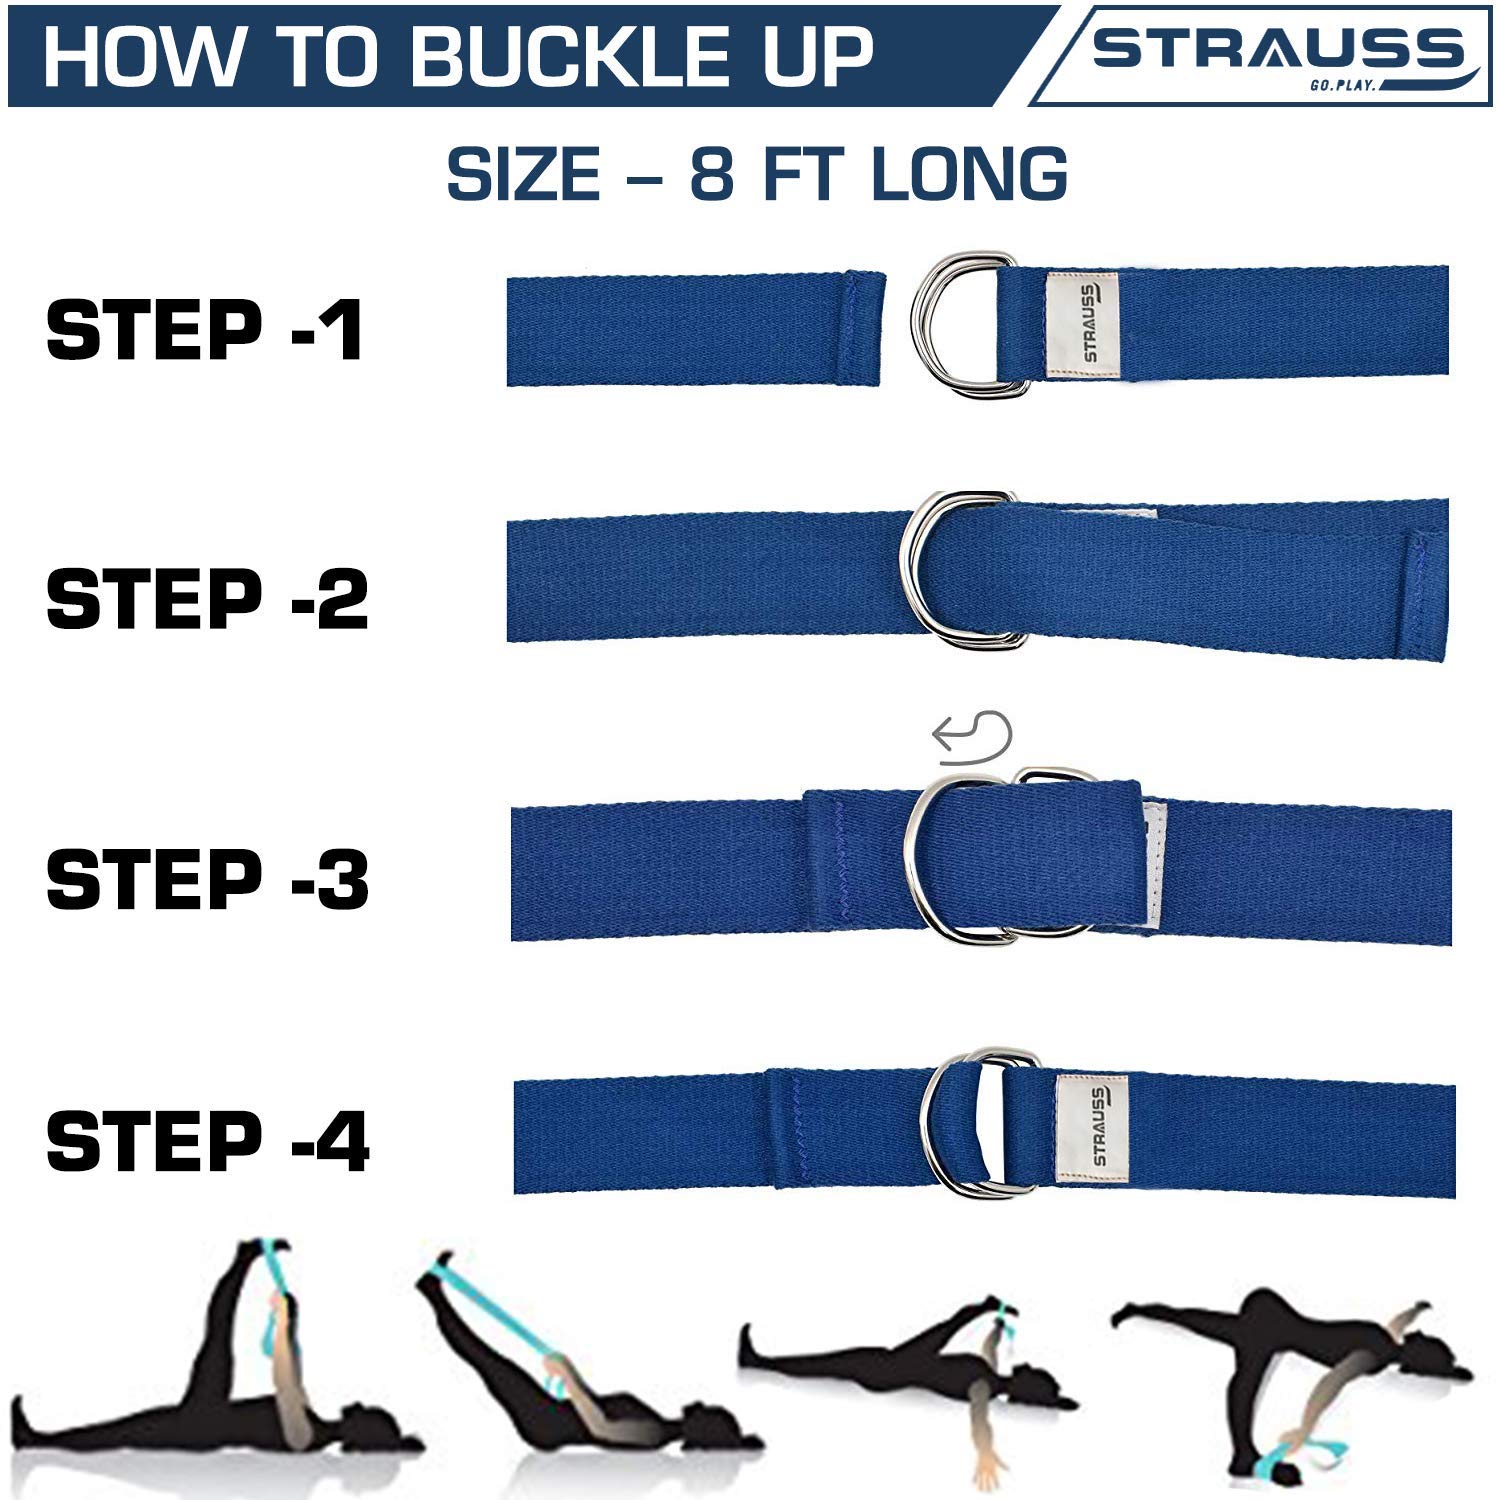 Strauss Lightweight Eco Friendly Yoga Mat 6 mm (Blue), Yoga Block (Navy Blue) Pair, Anti-Slip Yoga Towel (Blue) and Yoga Belt (Blue)